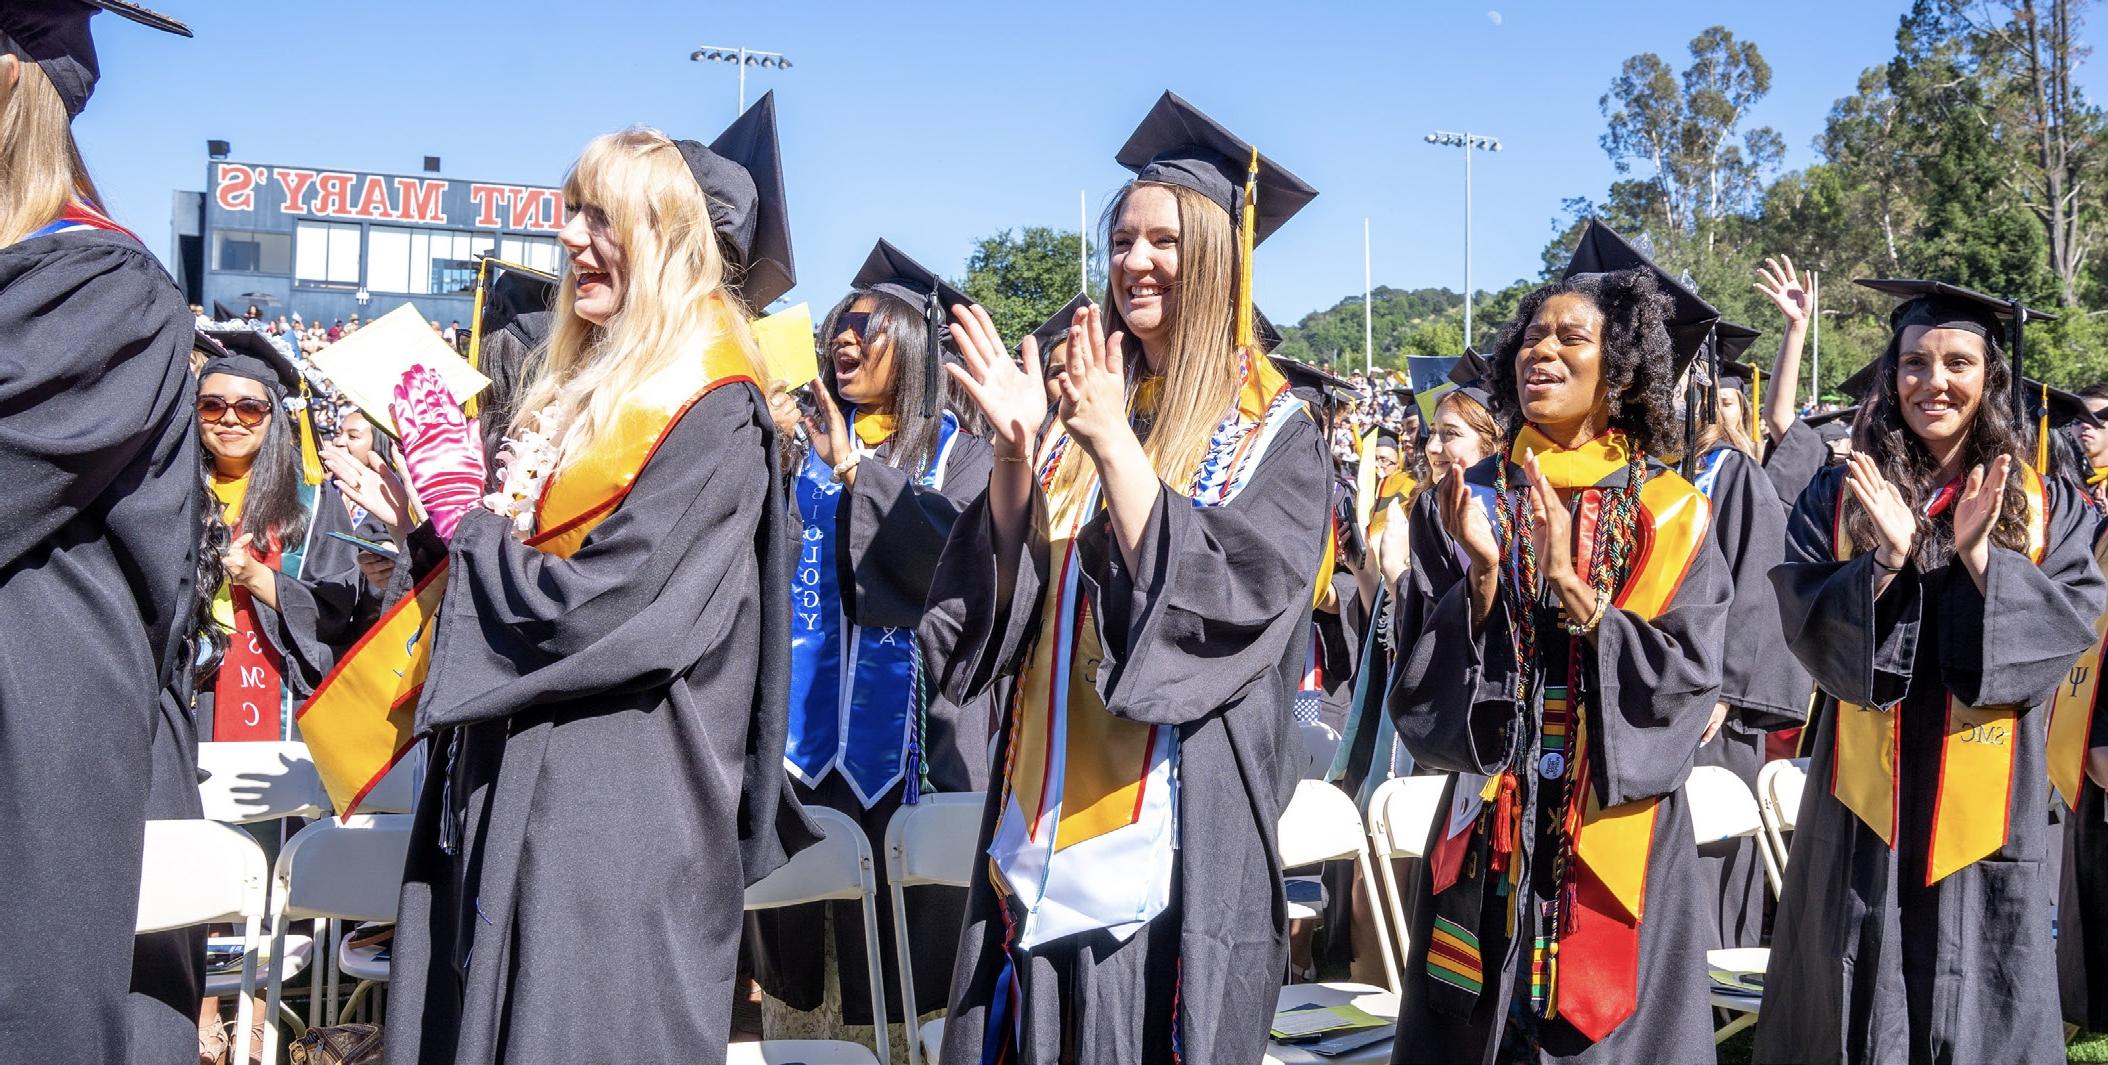 Students at graduation clapping